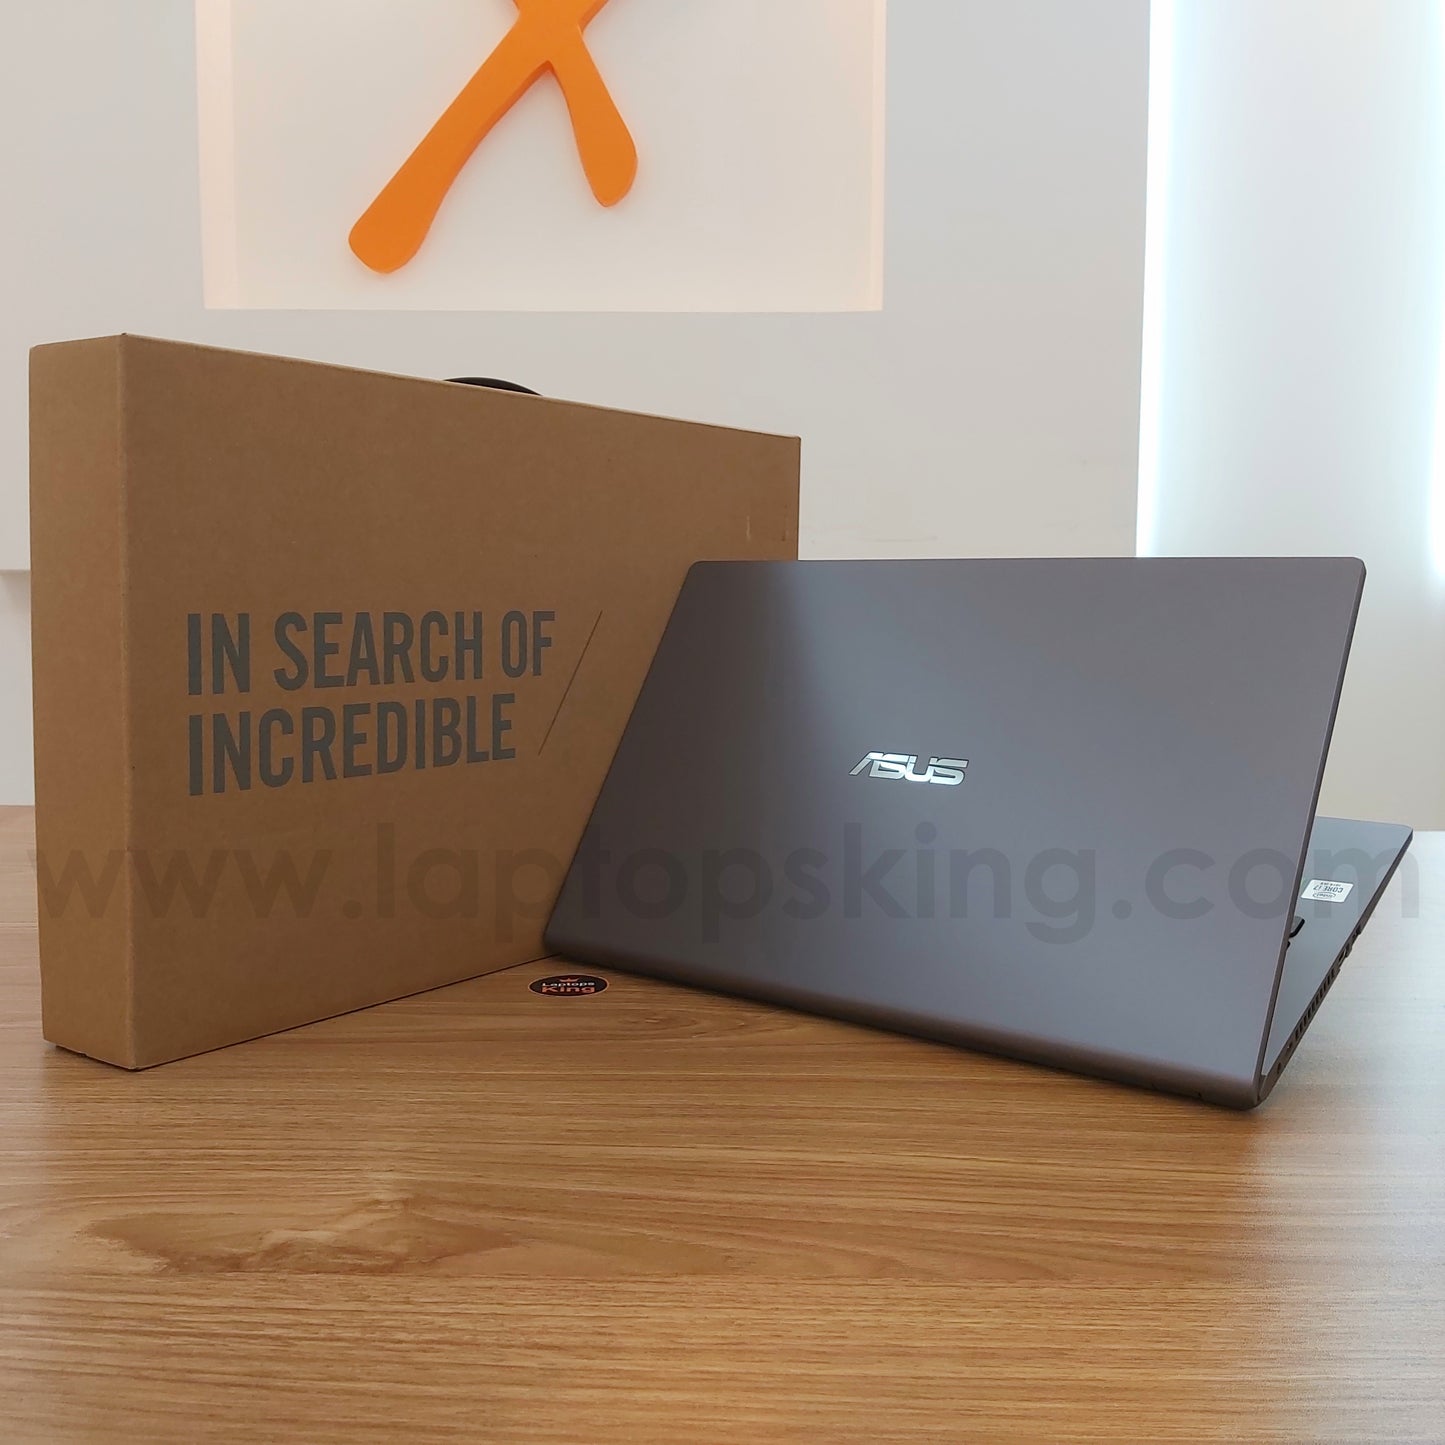 Asus VivoBook X509jb i7-1065G7 GeForce MX110 Laptop (New Open Box)